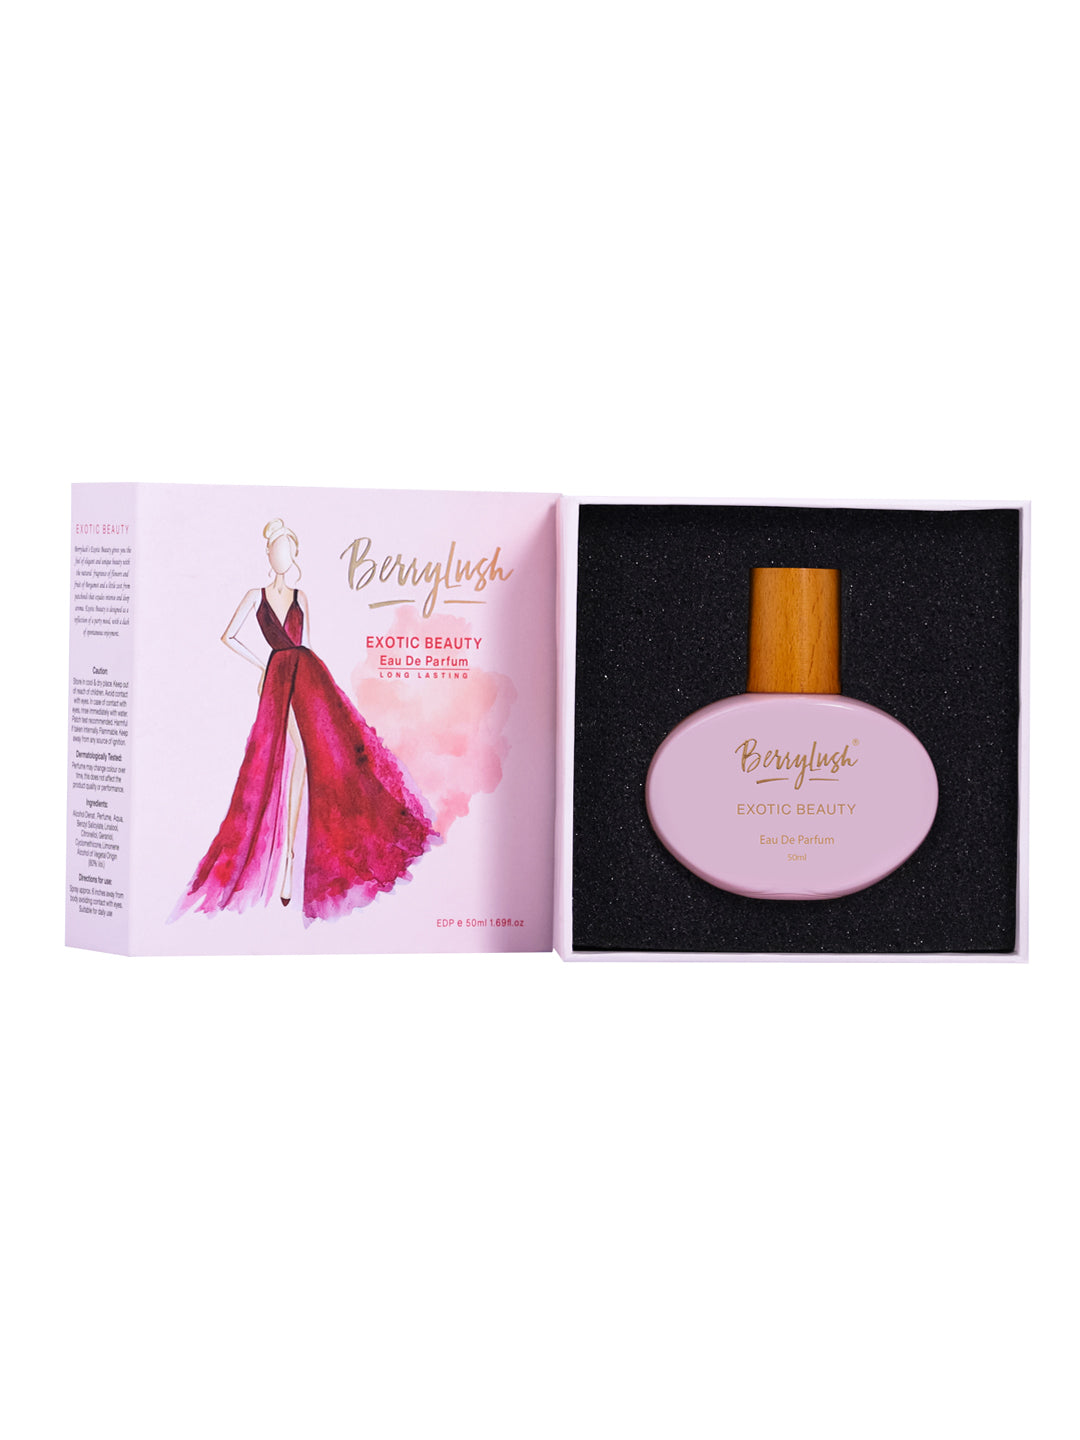 Berrylush Exotic Beauty Long Lasting Party Perfume - 50ml